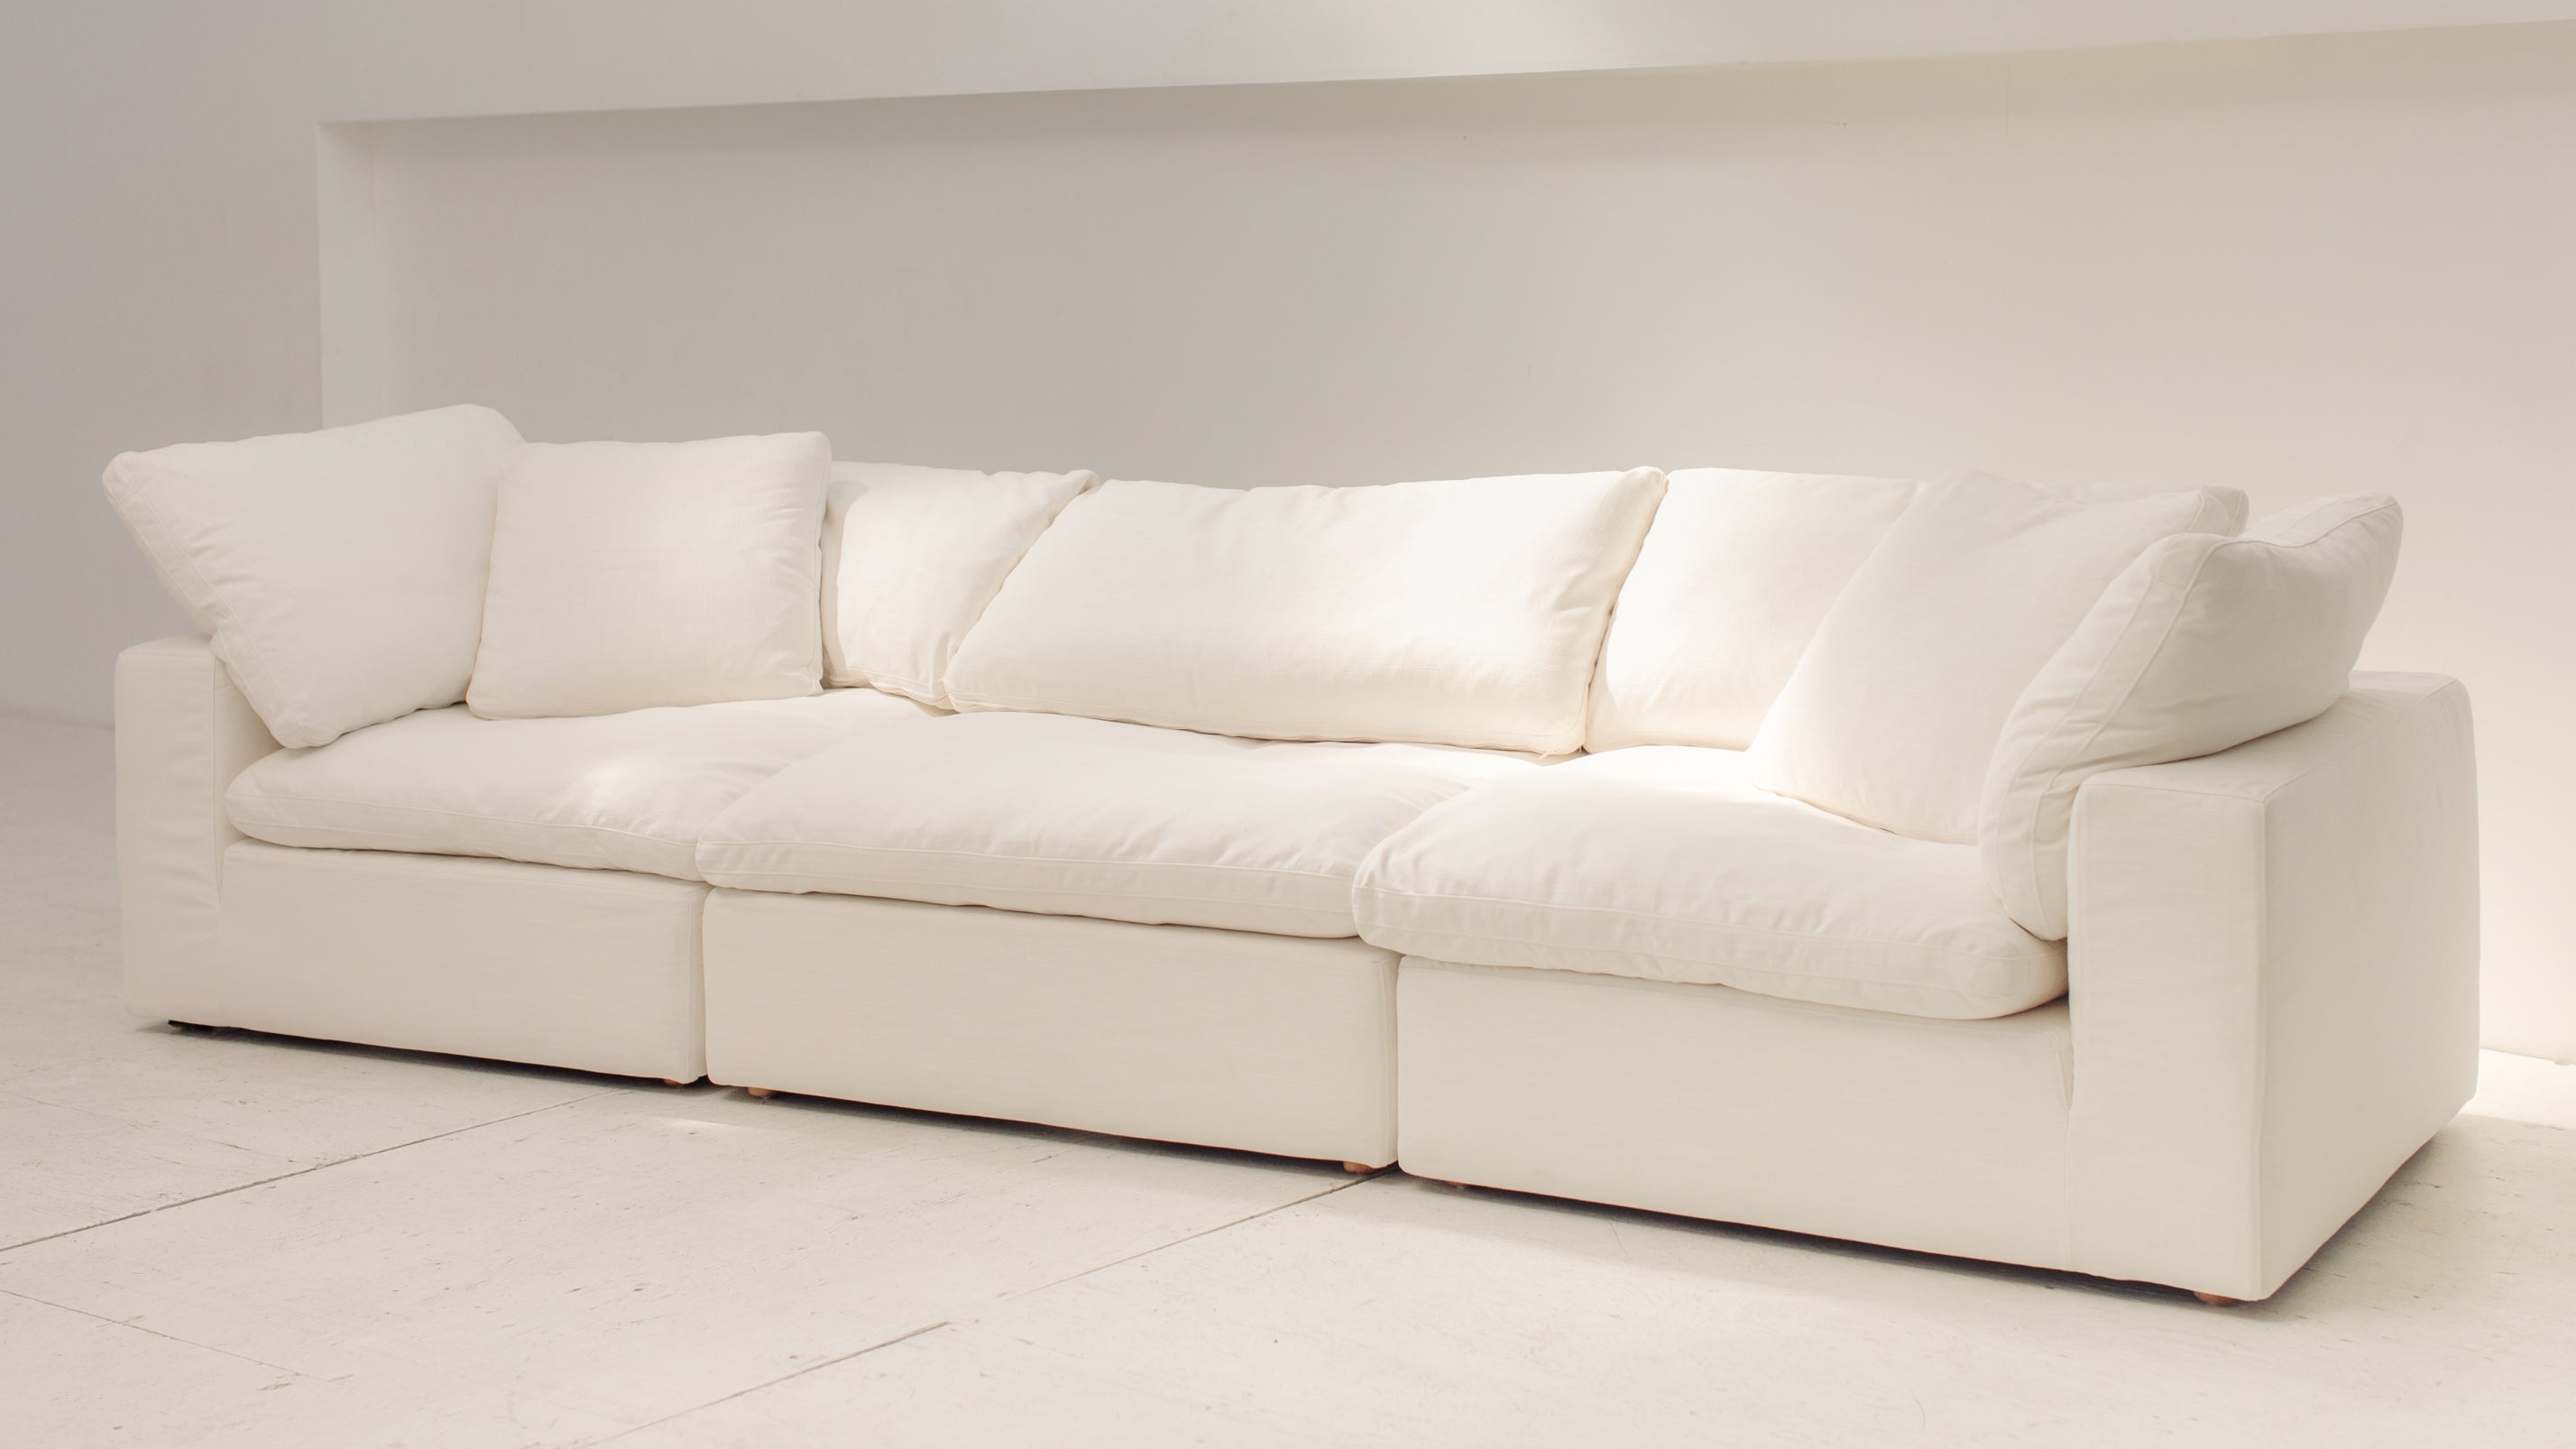 Movie Night™ 3-Piece Modular Sofa, Standard, Cream Linen - Image 4